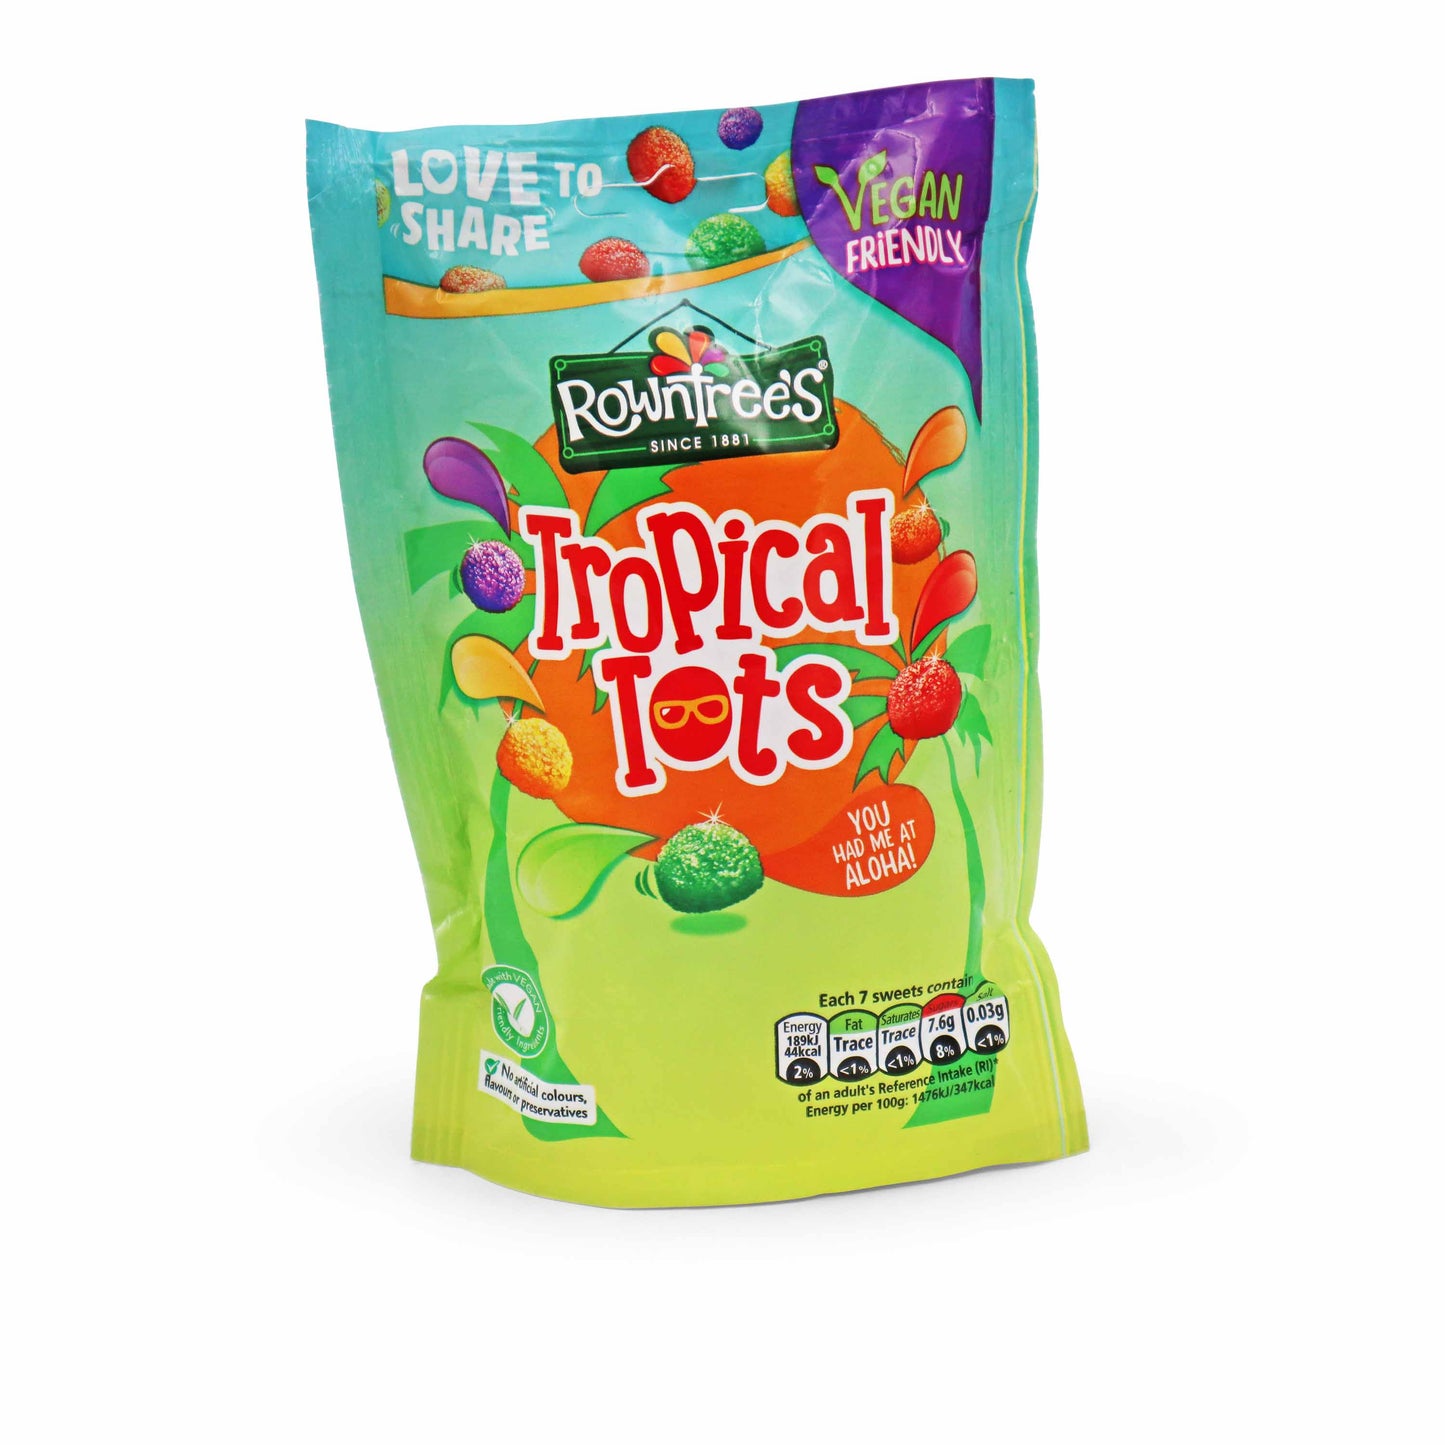 Rowntree's Tropical Tots Vegan Friendly Sweets Sharing Bag - 140g - British Snacks